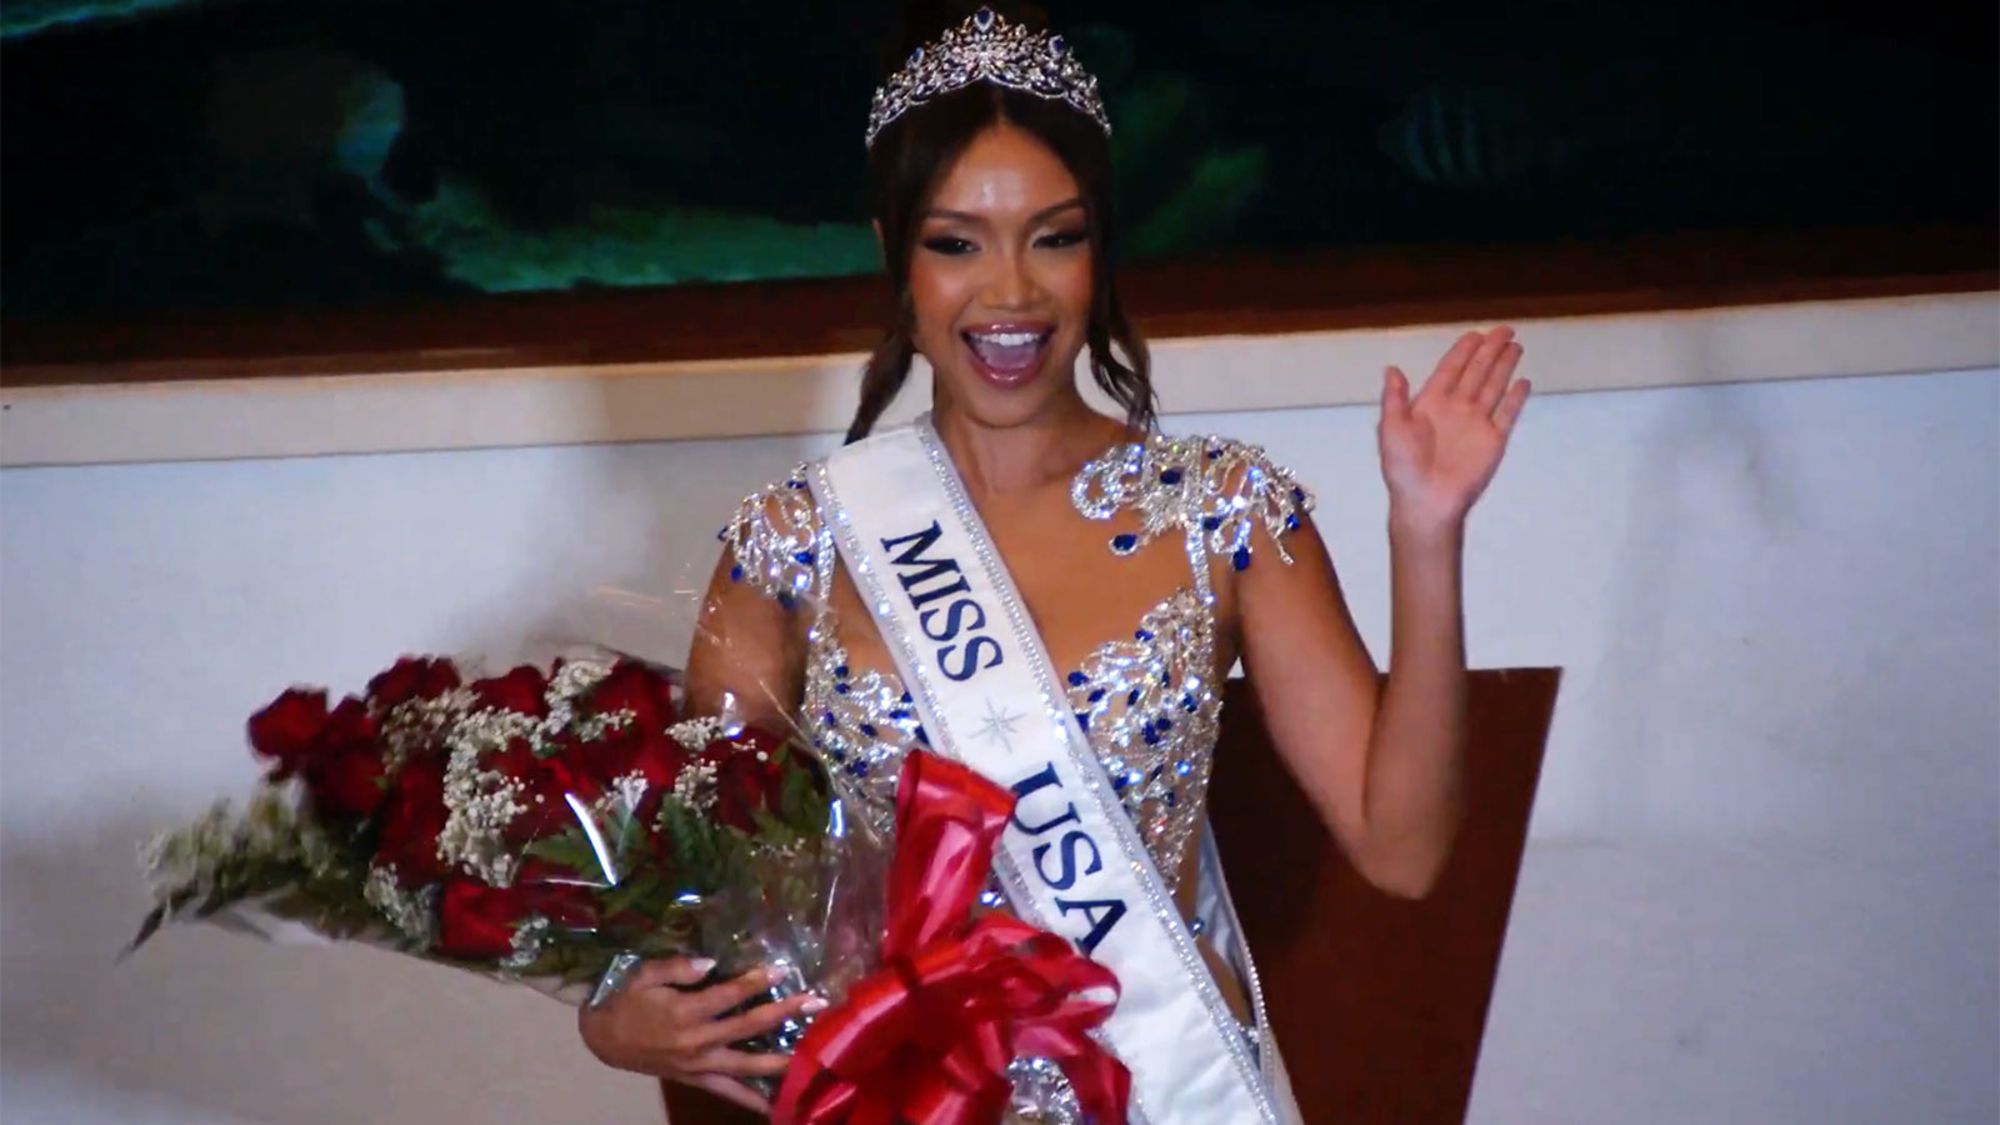 Coronation of new Miss USA Savannah Gankiewicz on Wednesday, May 15 in Honolulu, Hawaii.